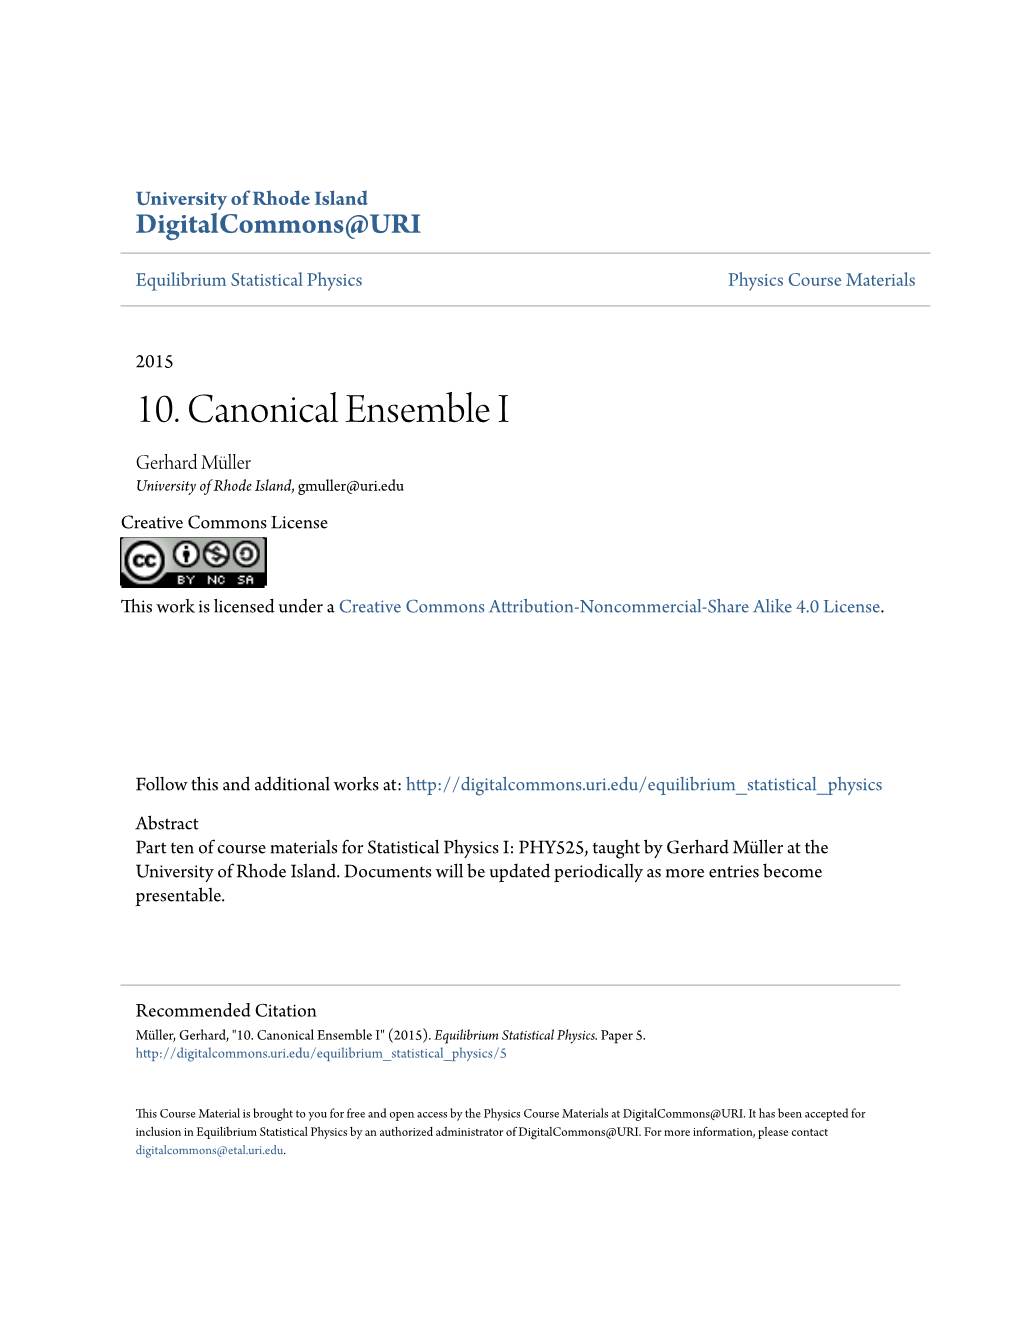 10. Canonical Ensemble I Gerhard Müller University of Rhode Island, Gmuller@Uri.Edu Creative Commons License